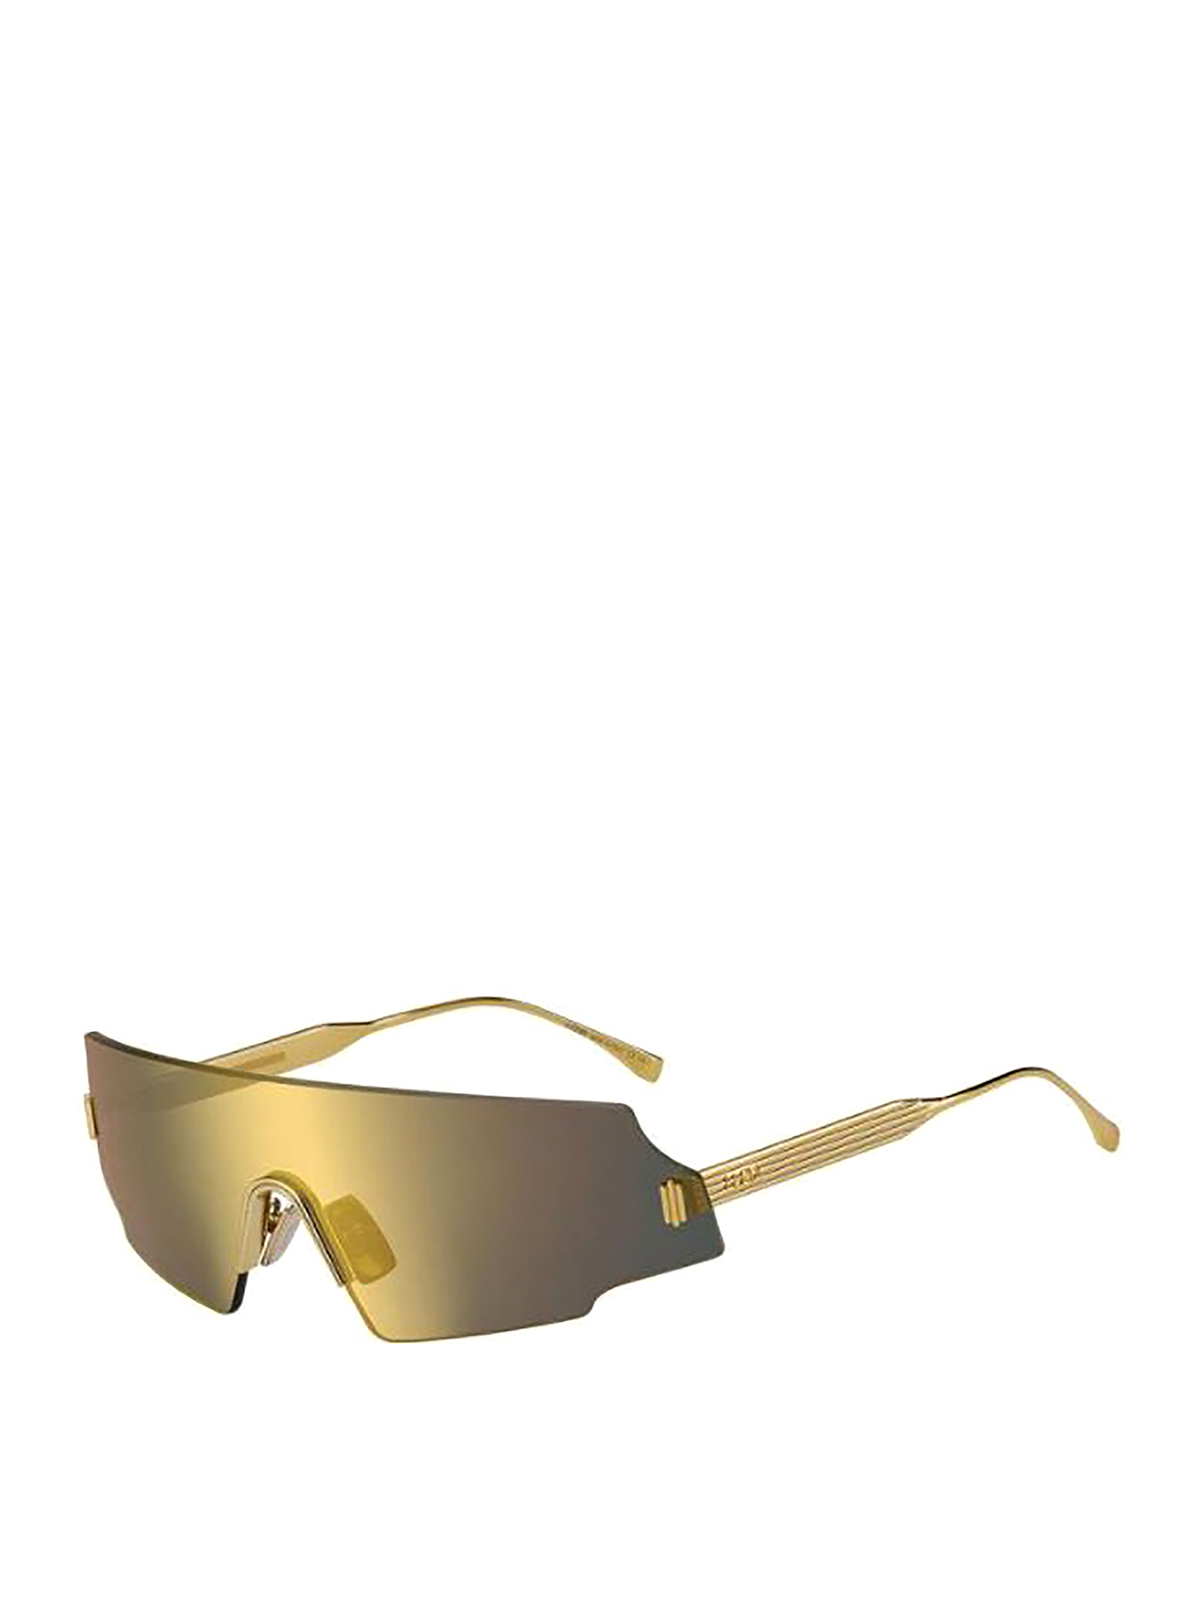 Fendi Forceful Sunglasses In Yellow